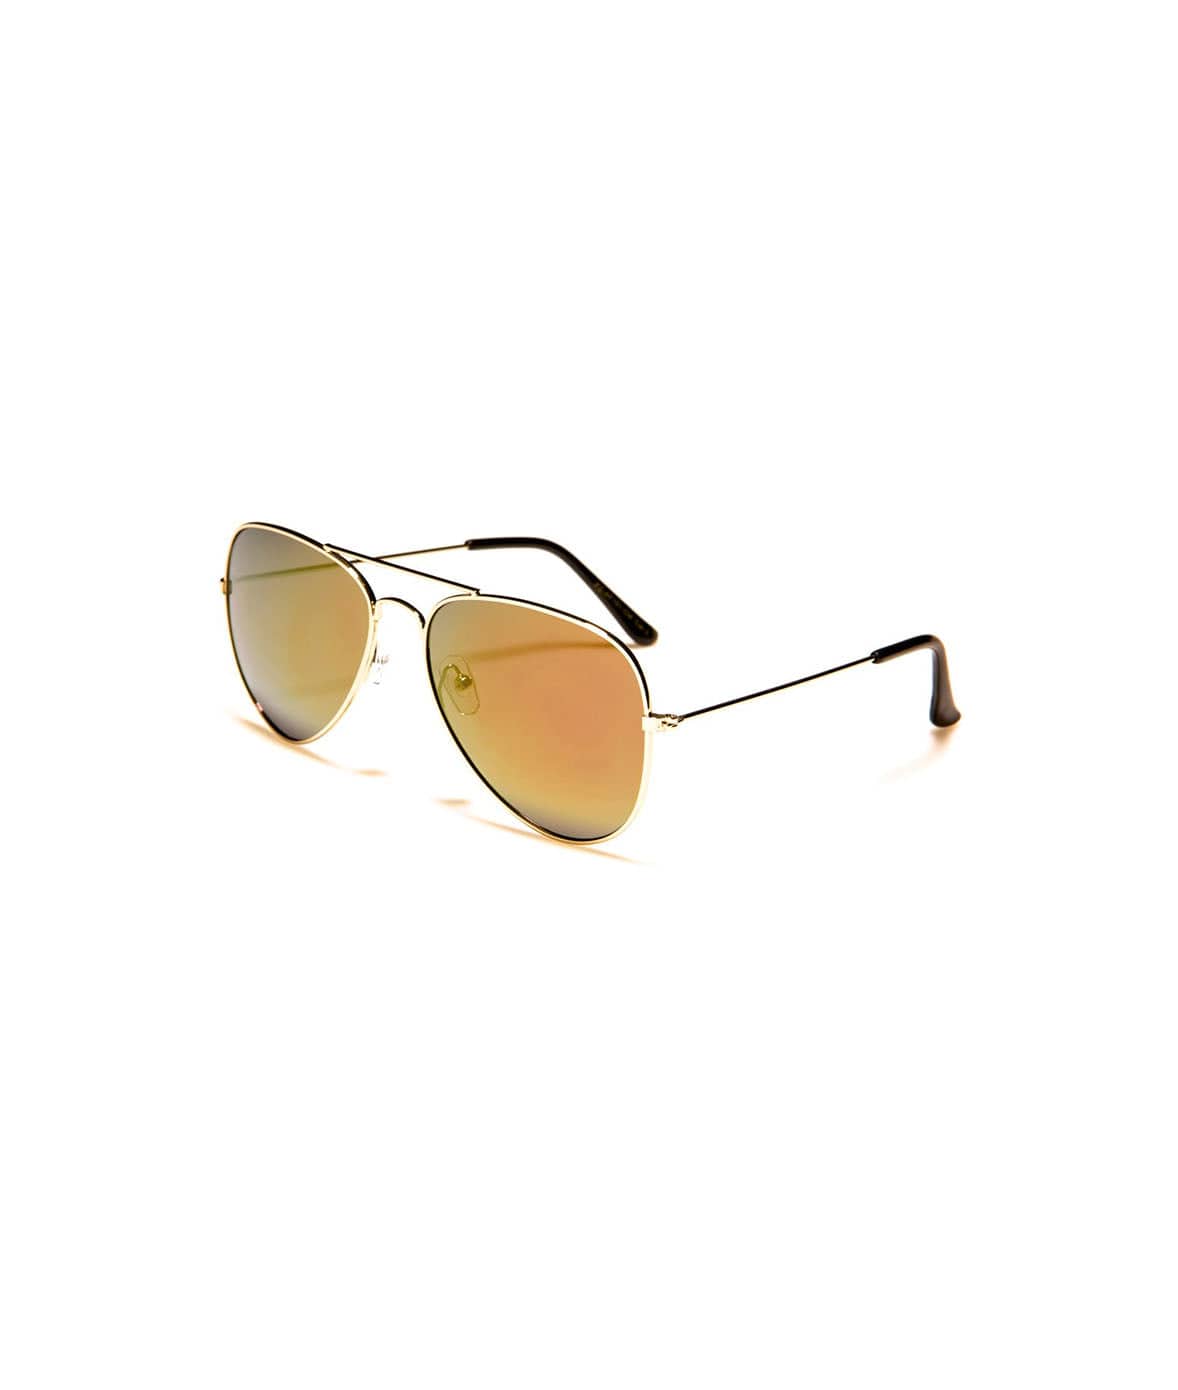 Jordan Polarized Aviator Sunglasses with Sunglass Case and Microfiber Cloth